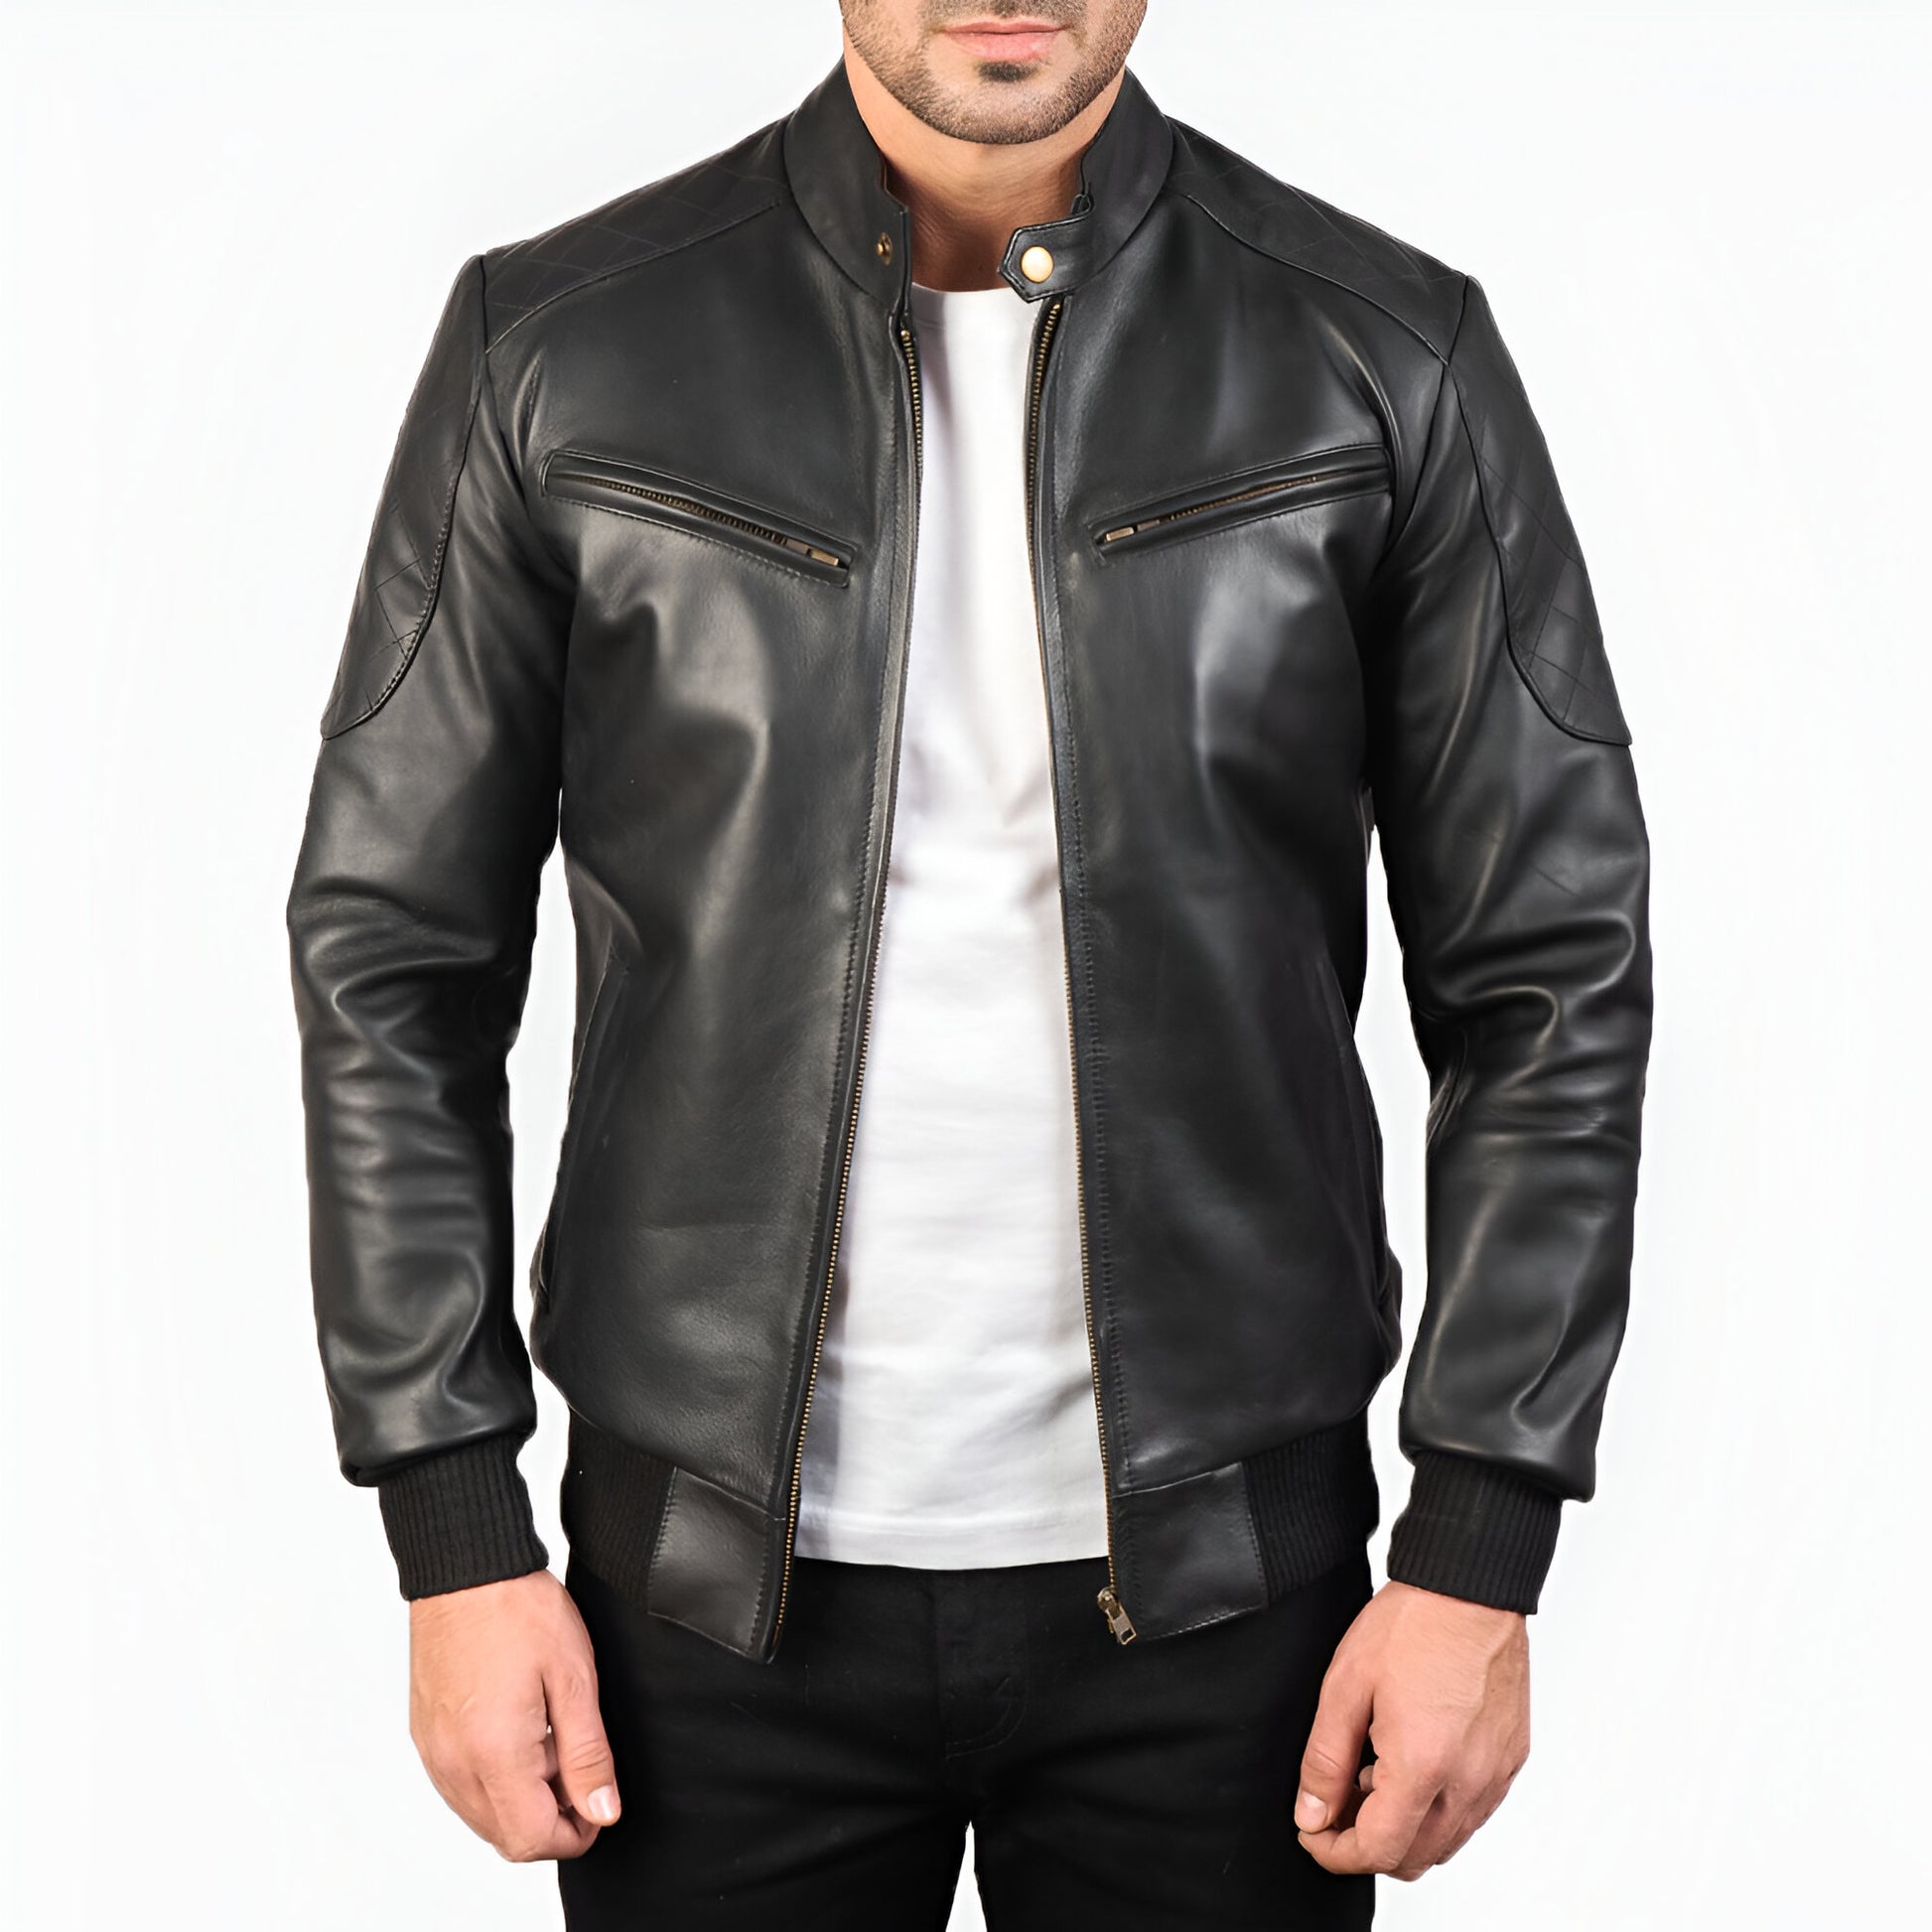 Dicks Leather Premium Black Leather Bomber Jacket